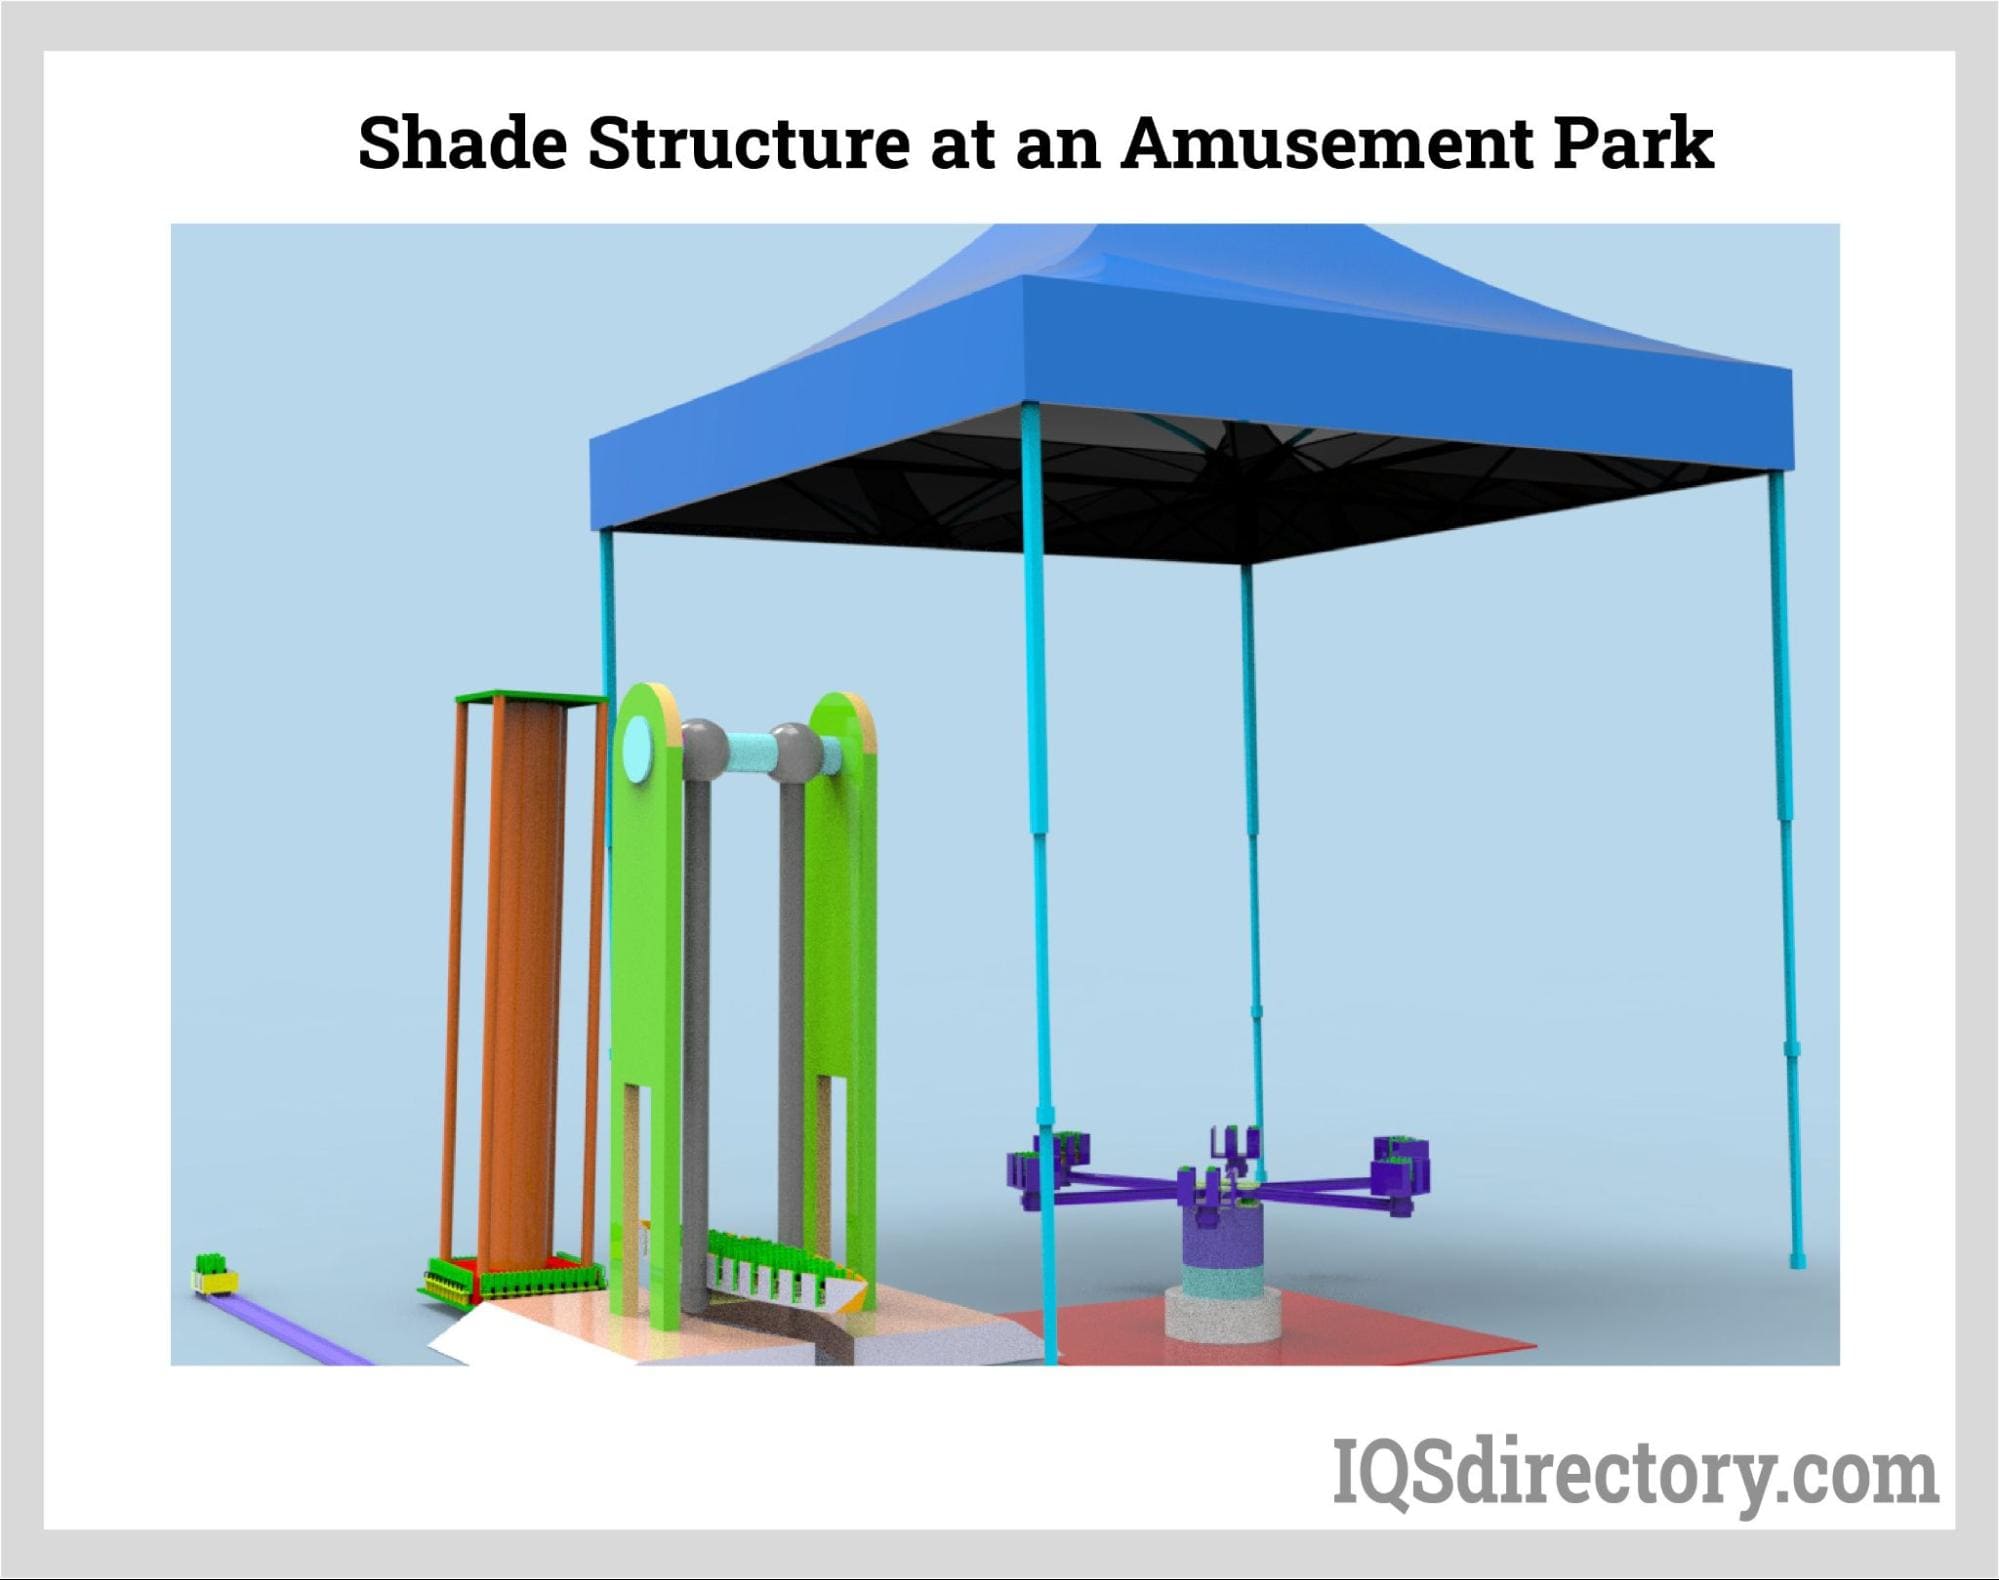 Shade Structure at an Amusement Park